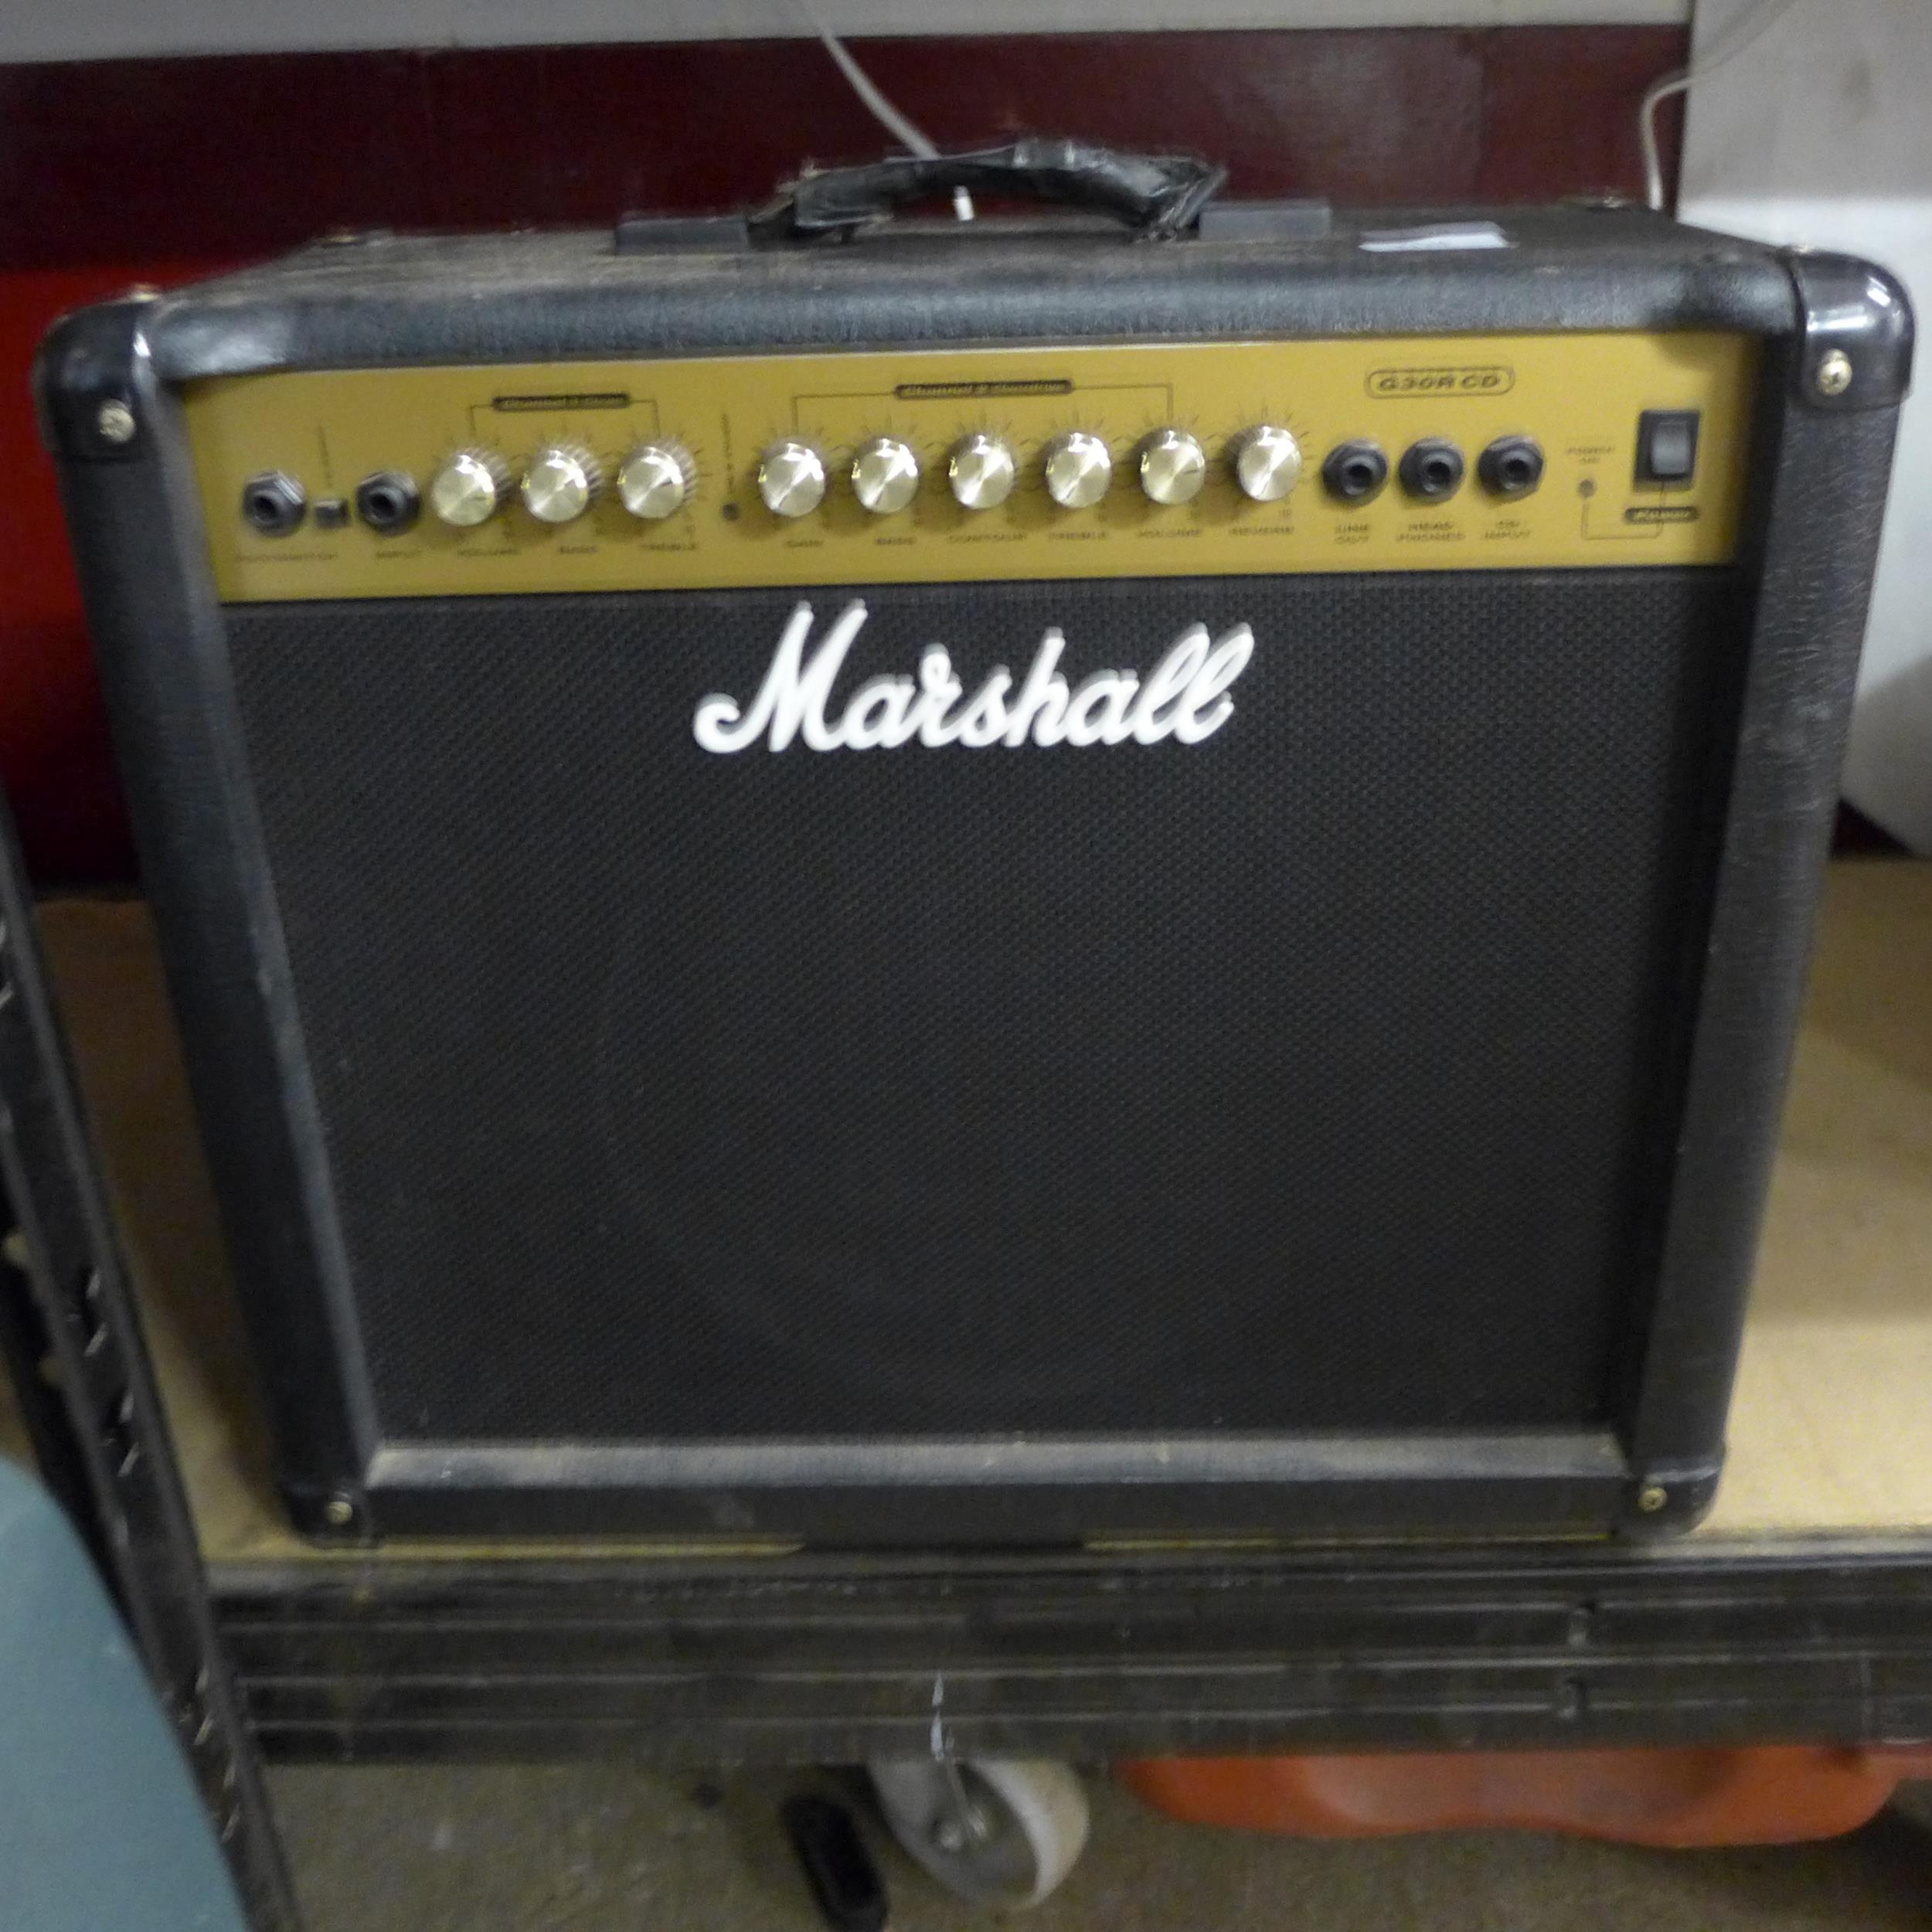 A Marshall guitar amp (model G30RCD)